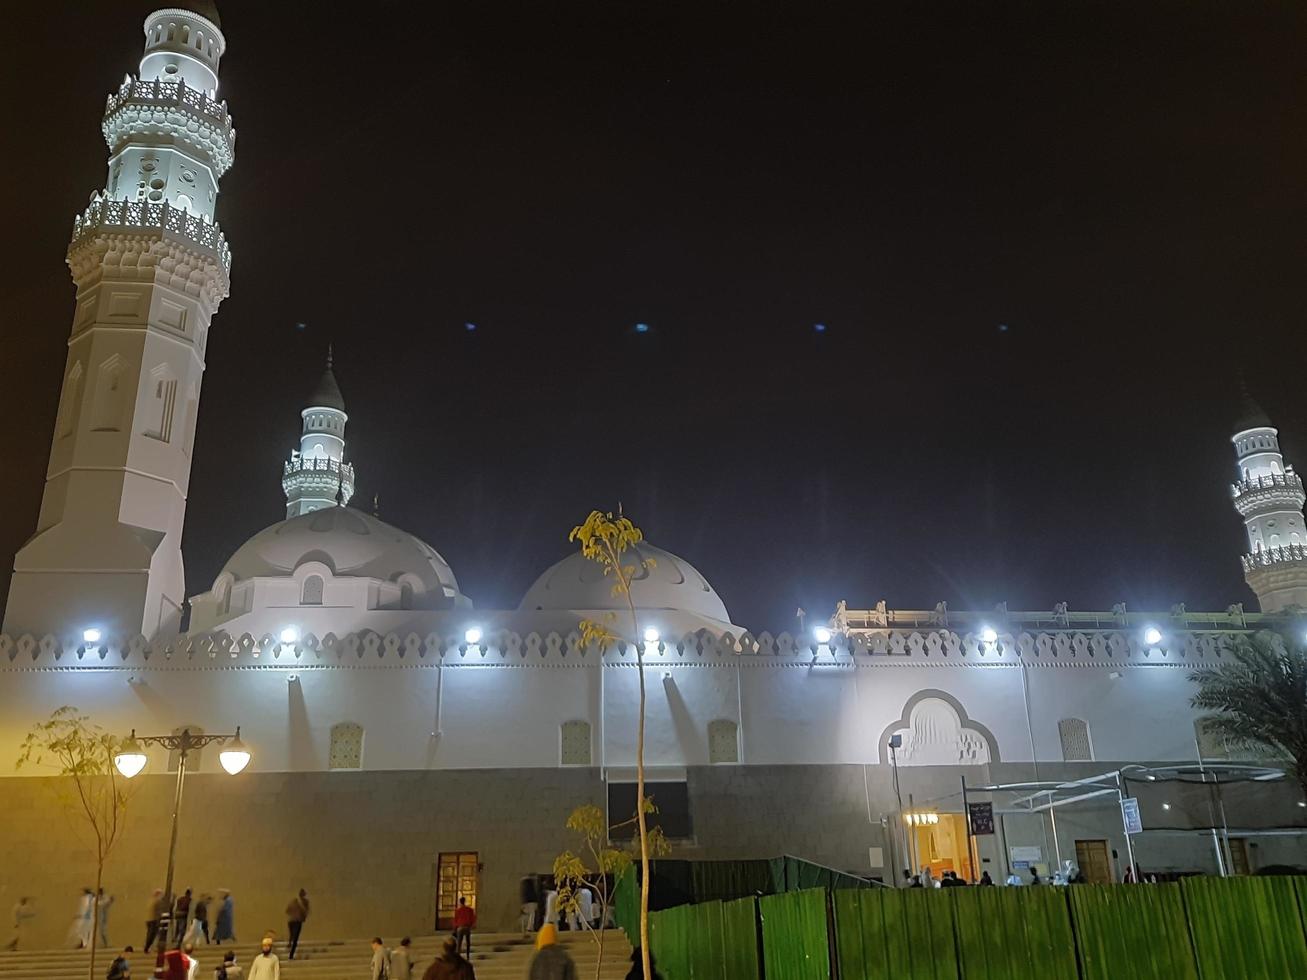 Medina, Saudi Arabia, Dec 2022 - A beautiful view of the minarets and dome of the Quba Mosque in Medina, Saudi Arabia at night. photo